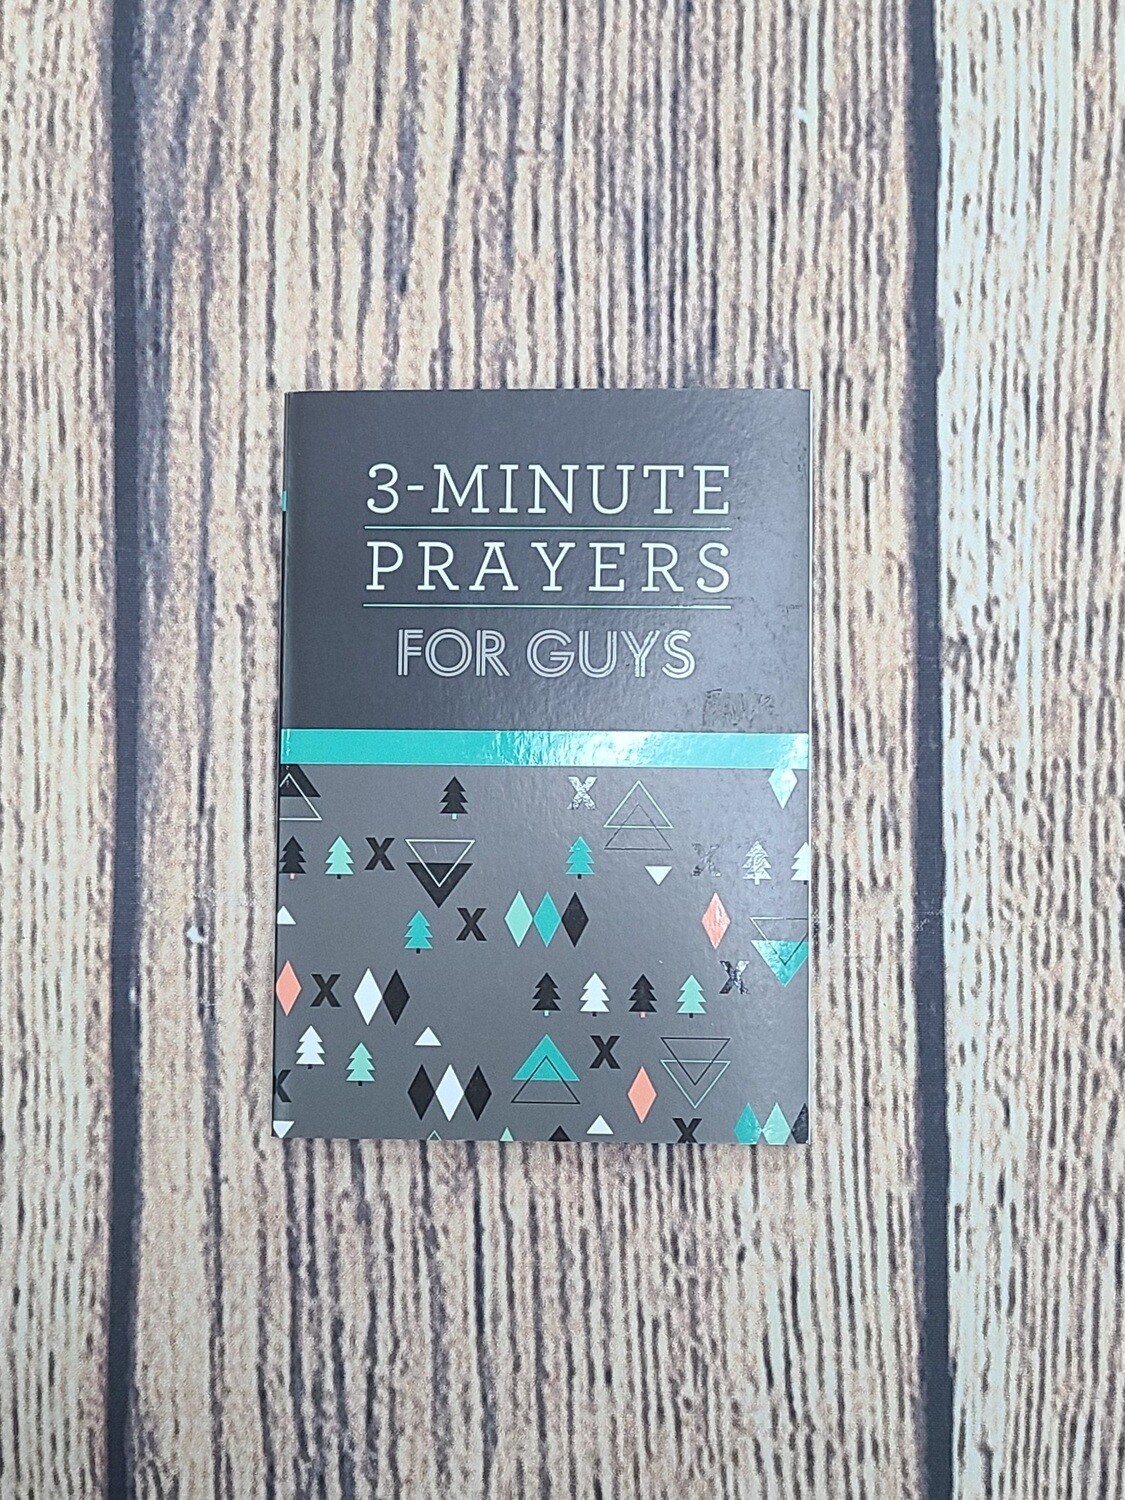 3-Minute Prayers for Guys by Glenn Hascall